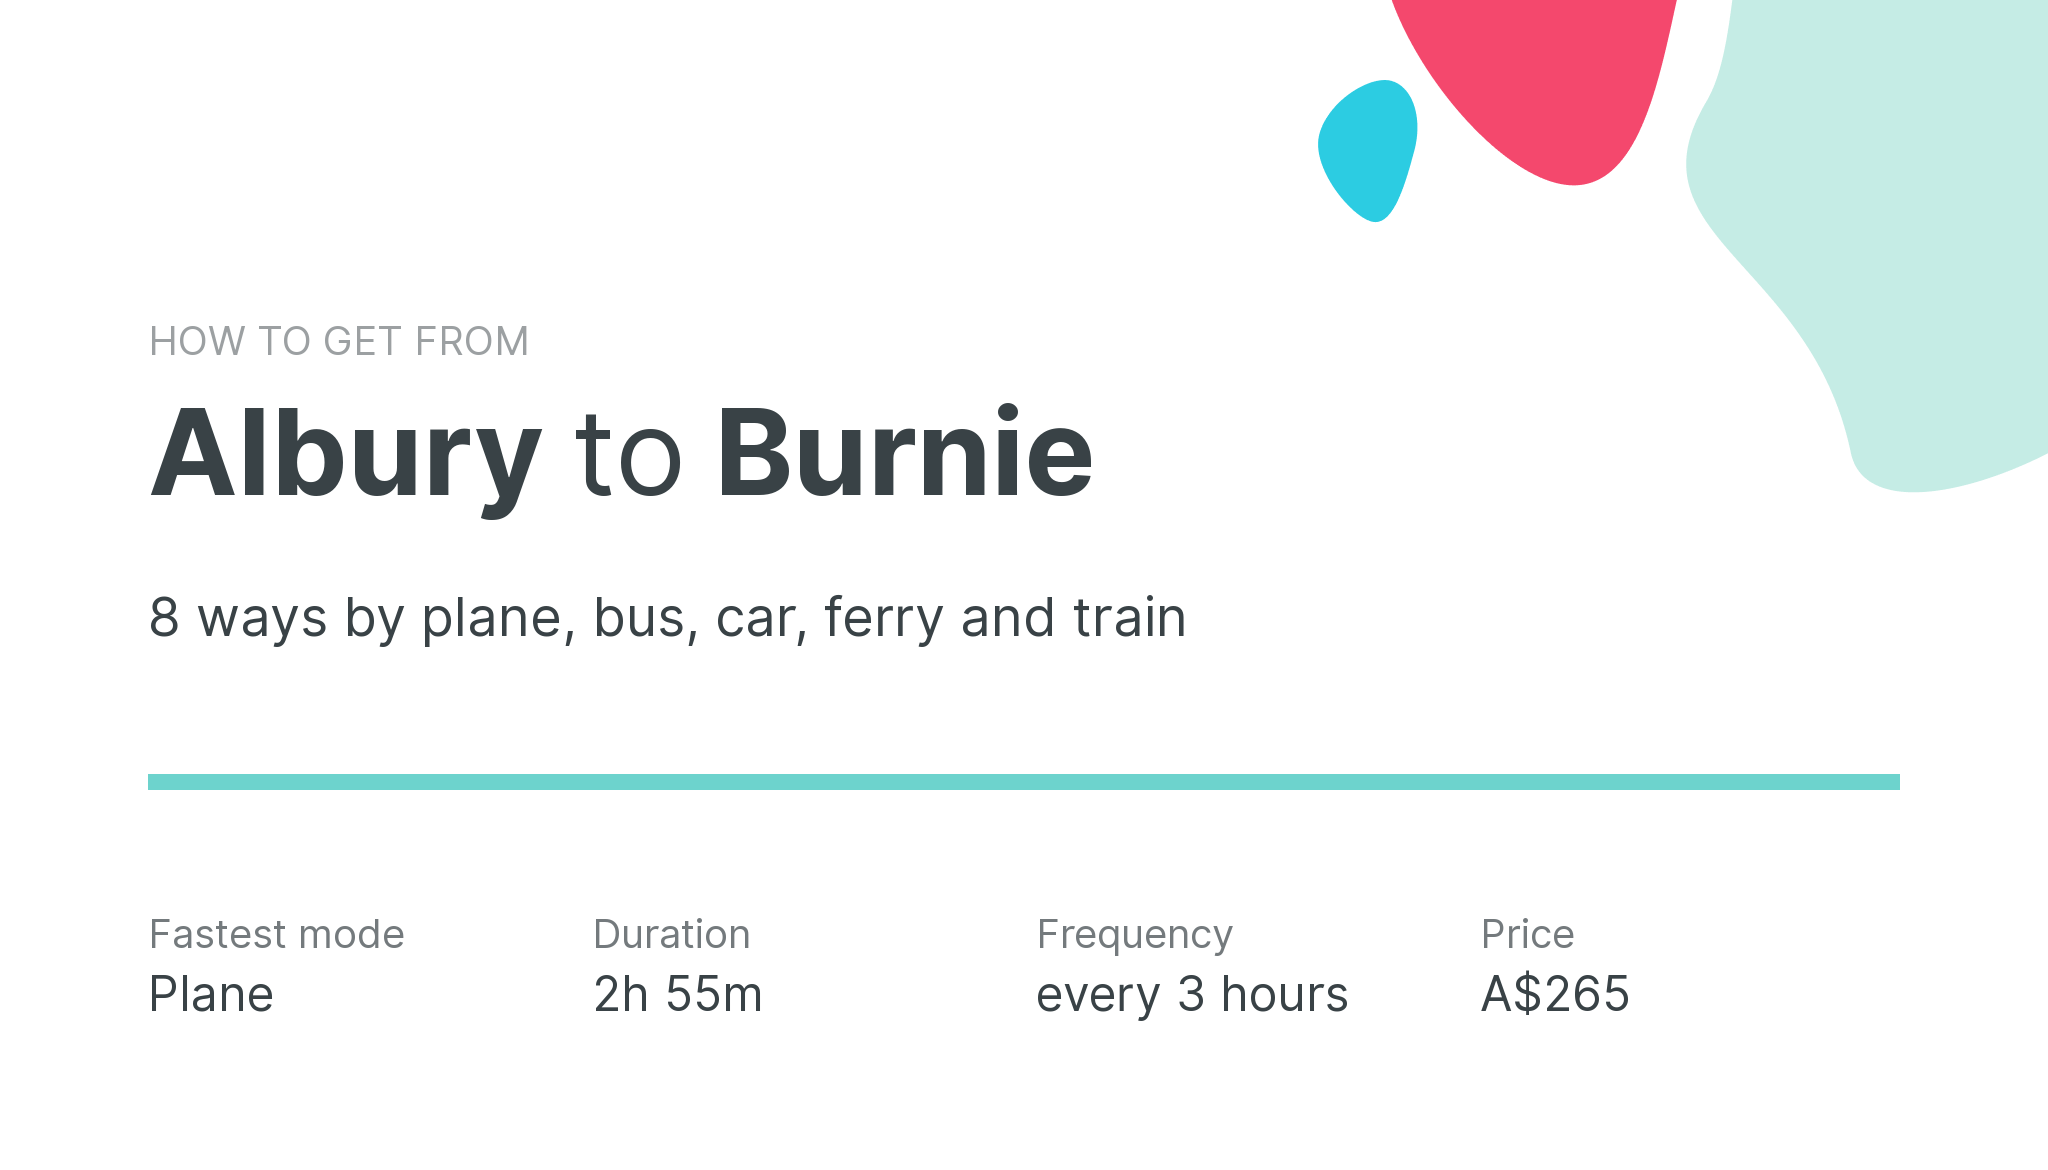 How do I get from Albury to Burnie